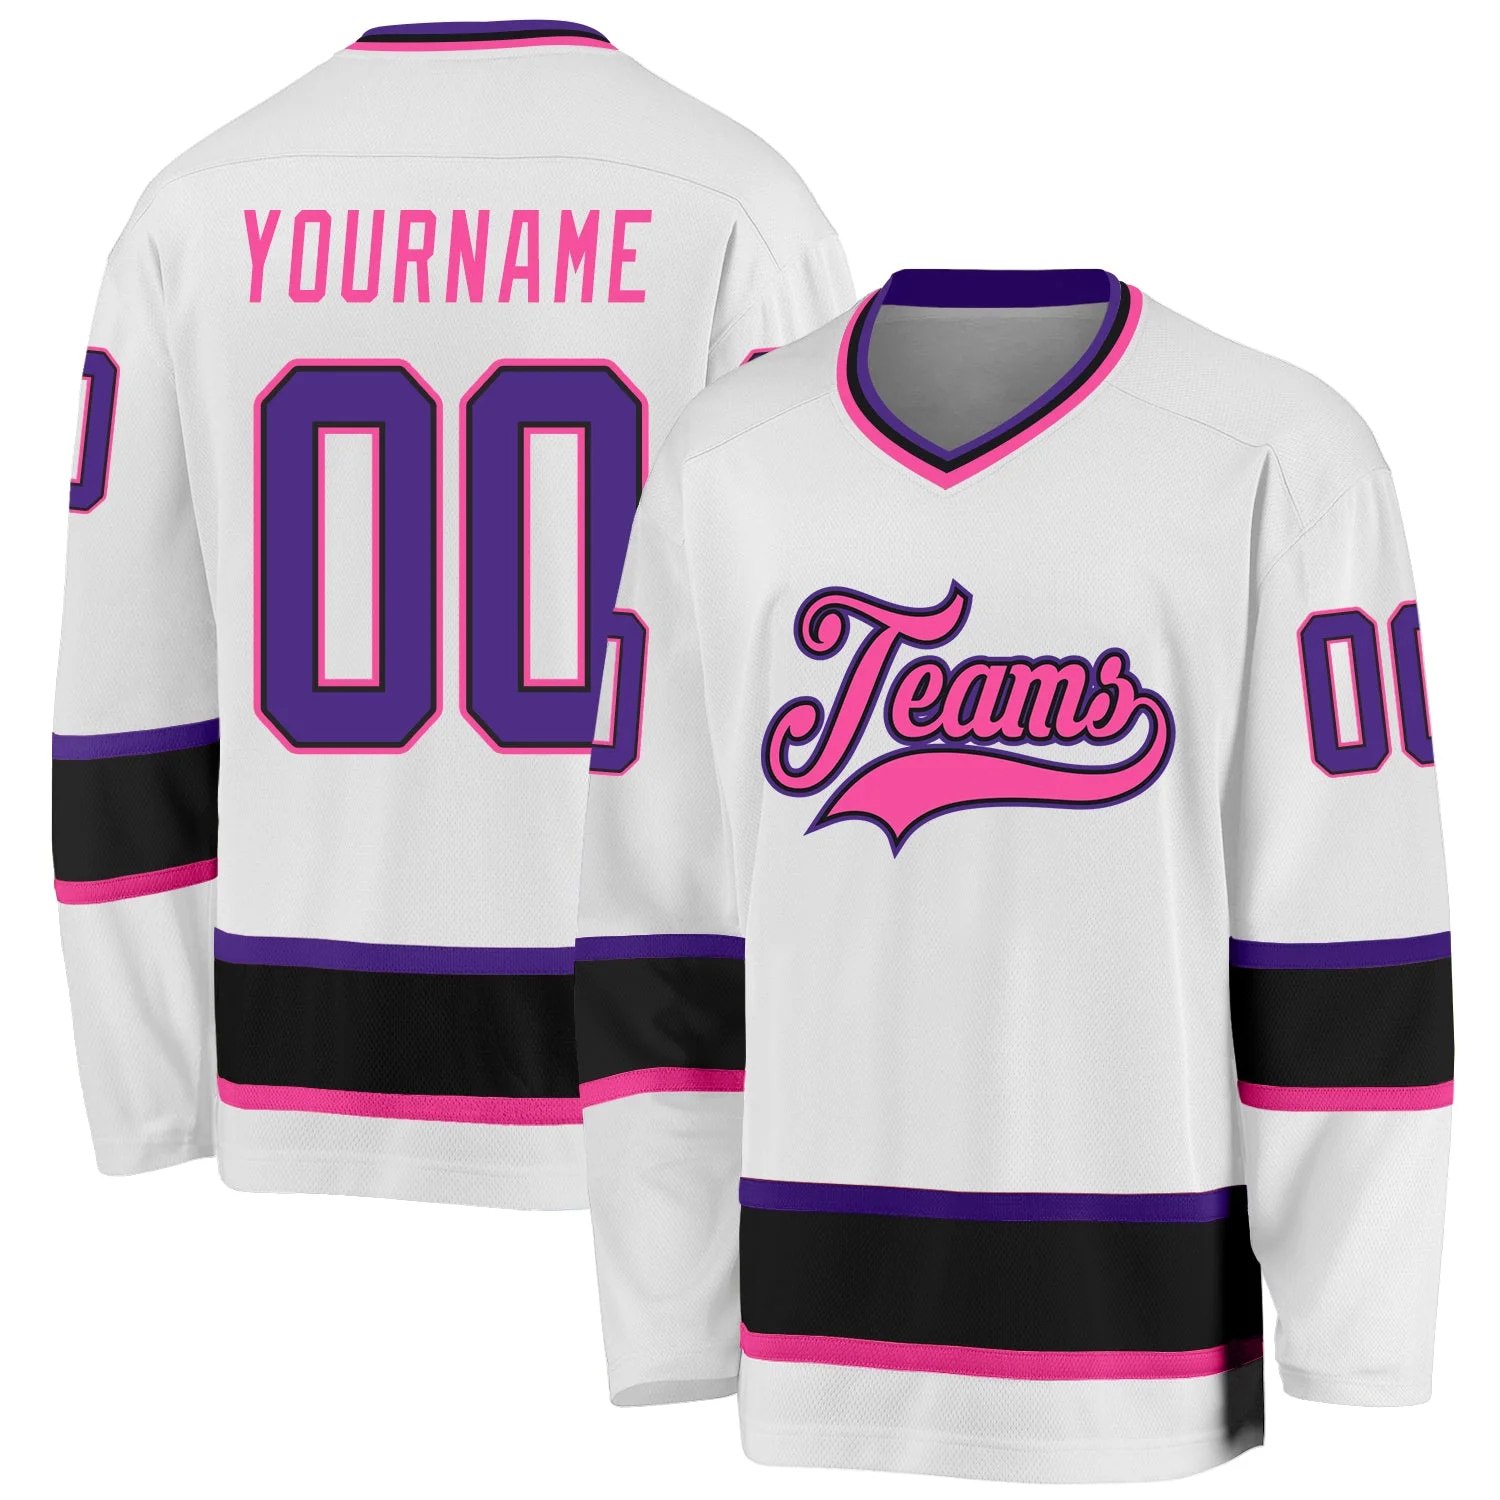 Stitched And Print White Purple Black-pink Hockey Jersey Custom